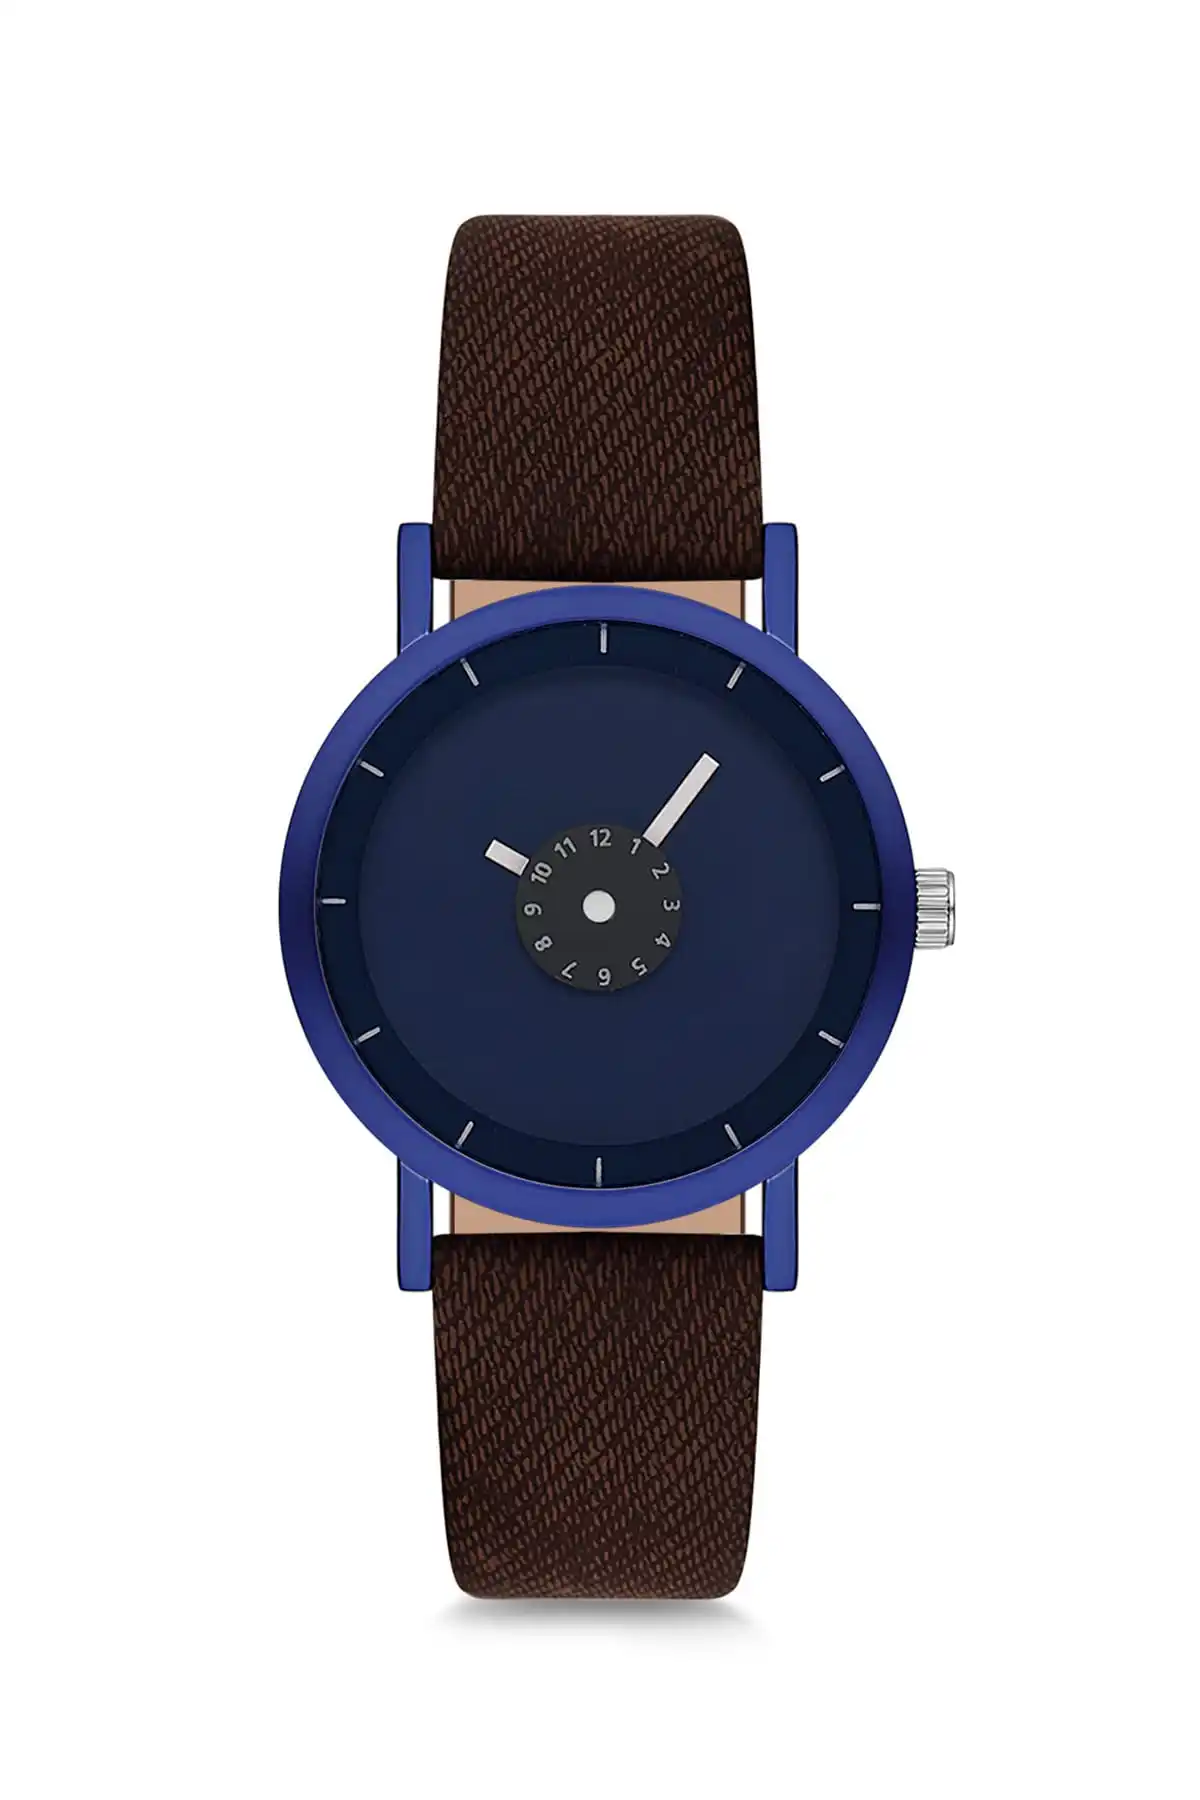 

2022 Watches Woman Luxury Fashion Sport Refresh Brands Top Quartz Stylish Clock High Quality Premium Wristwatch